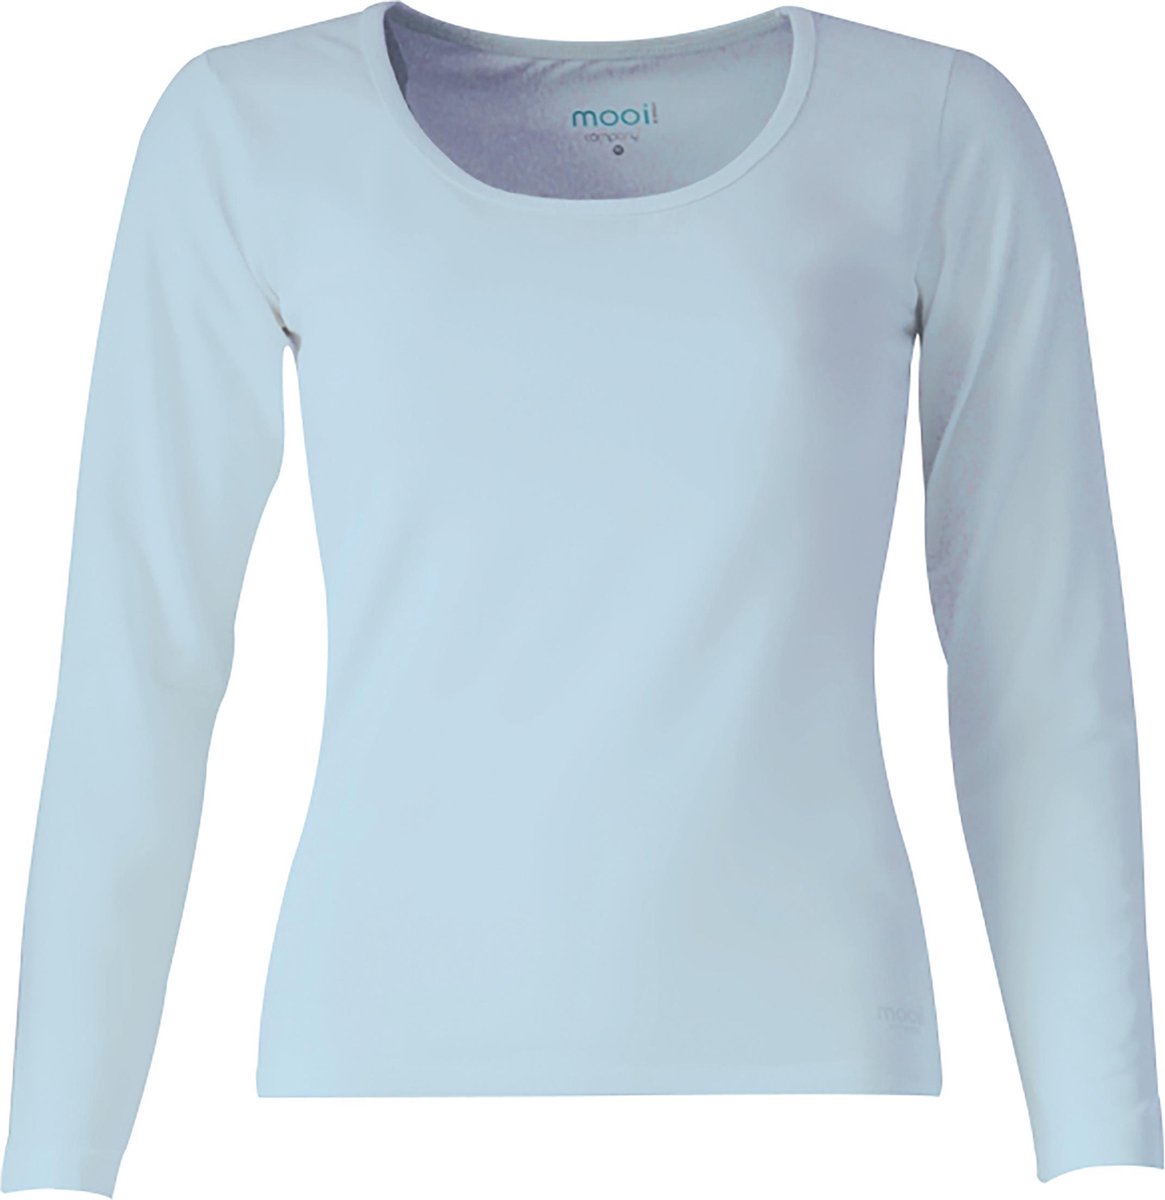 MOOI! Company -T-shirt Arlette lange mouw - O-Hals - Aansluitend model - Kleur Light Blue - XS